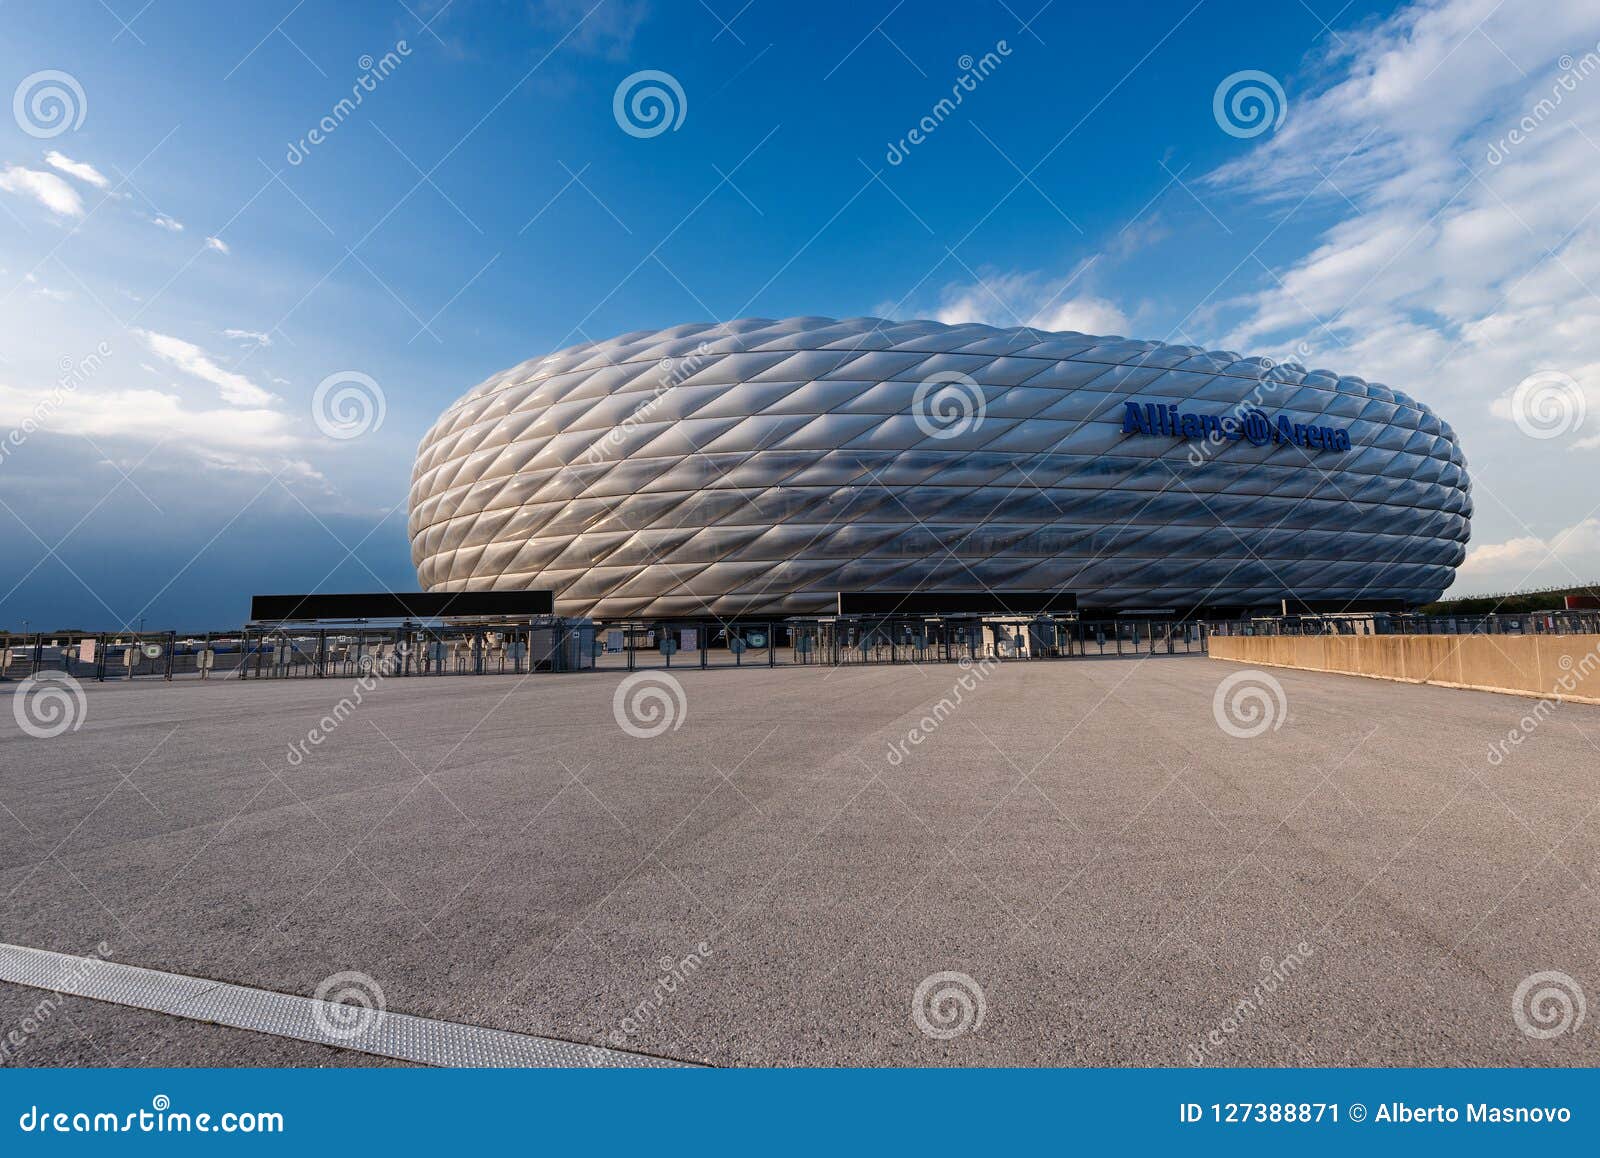 Allianz Arena Football Stadium Munich Germany Editorial Photo Image Of Building Futuristic 127388871